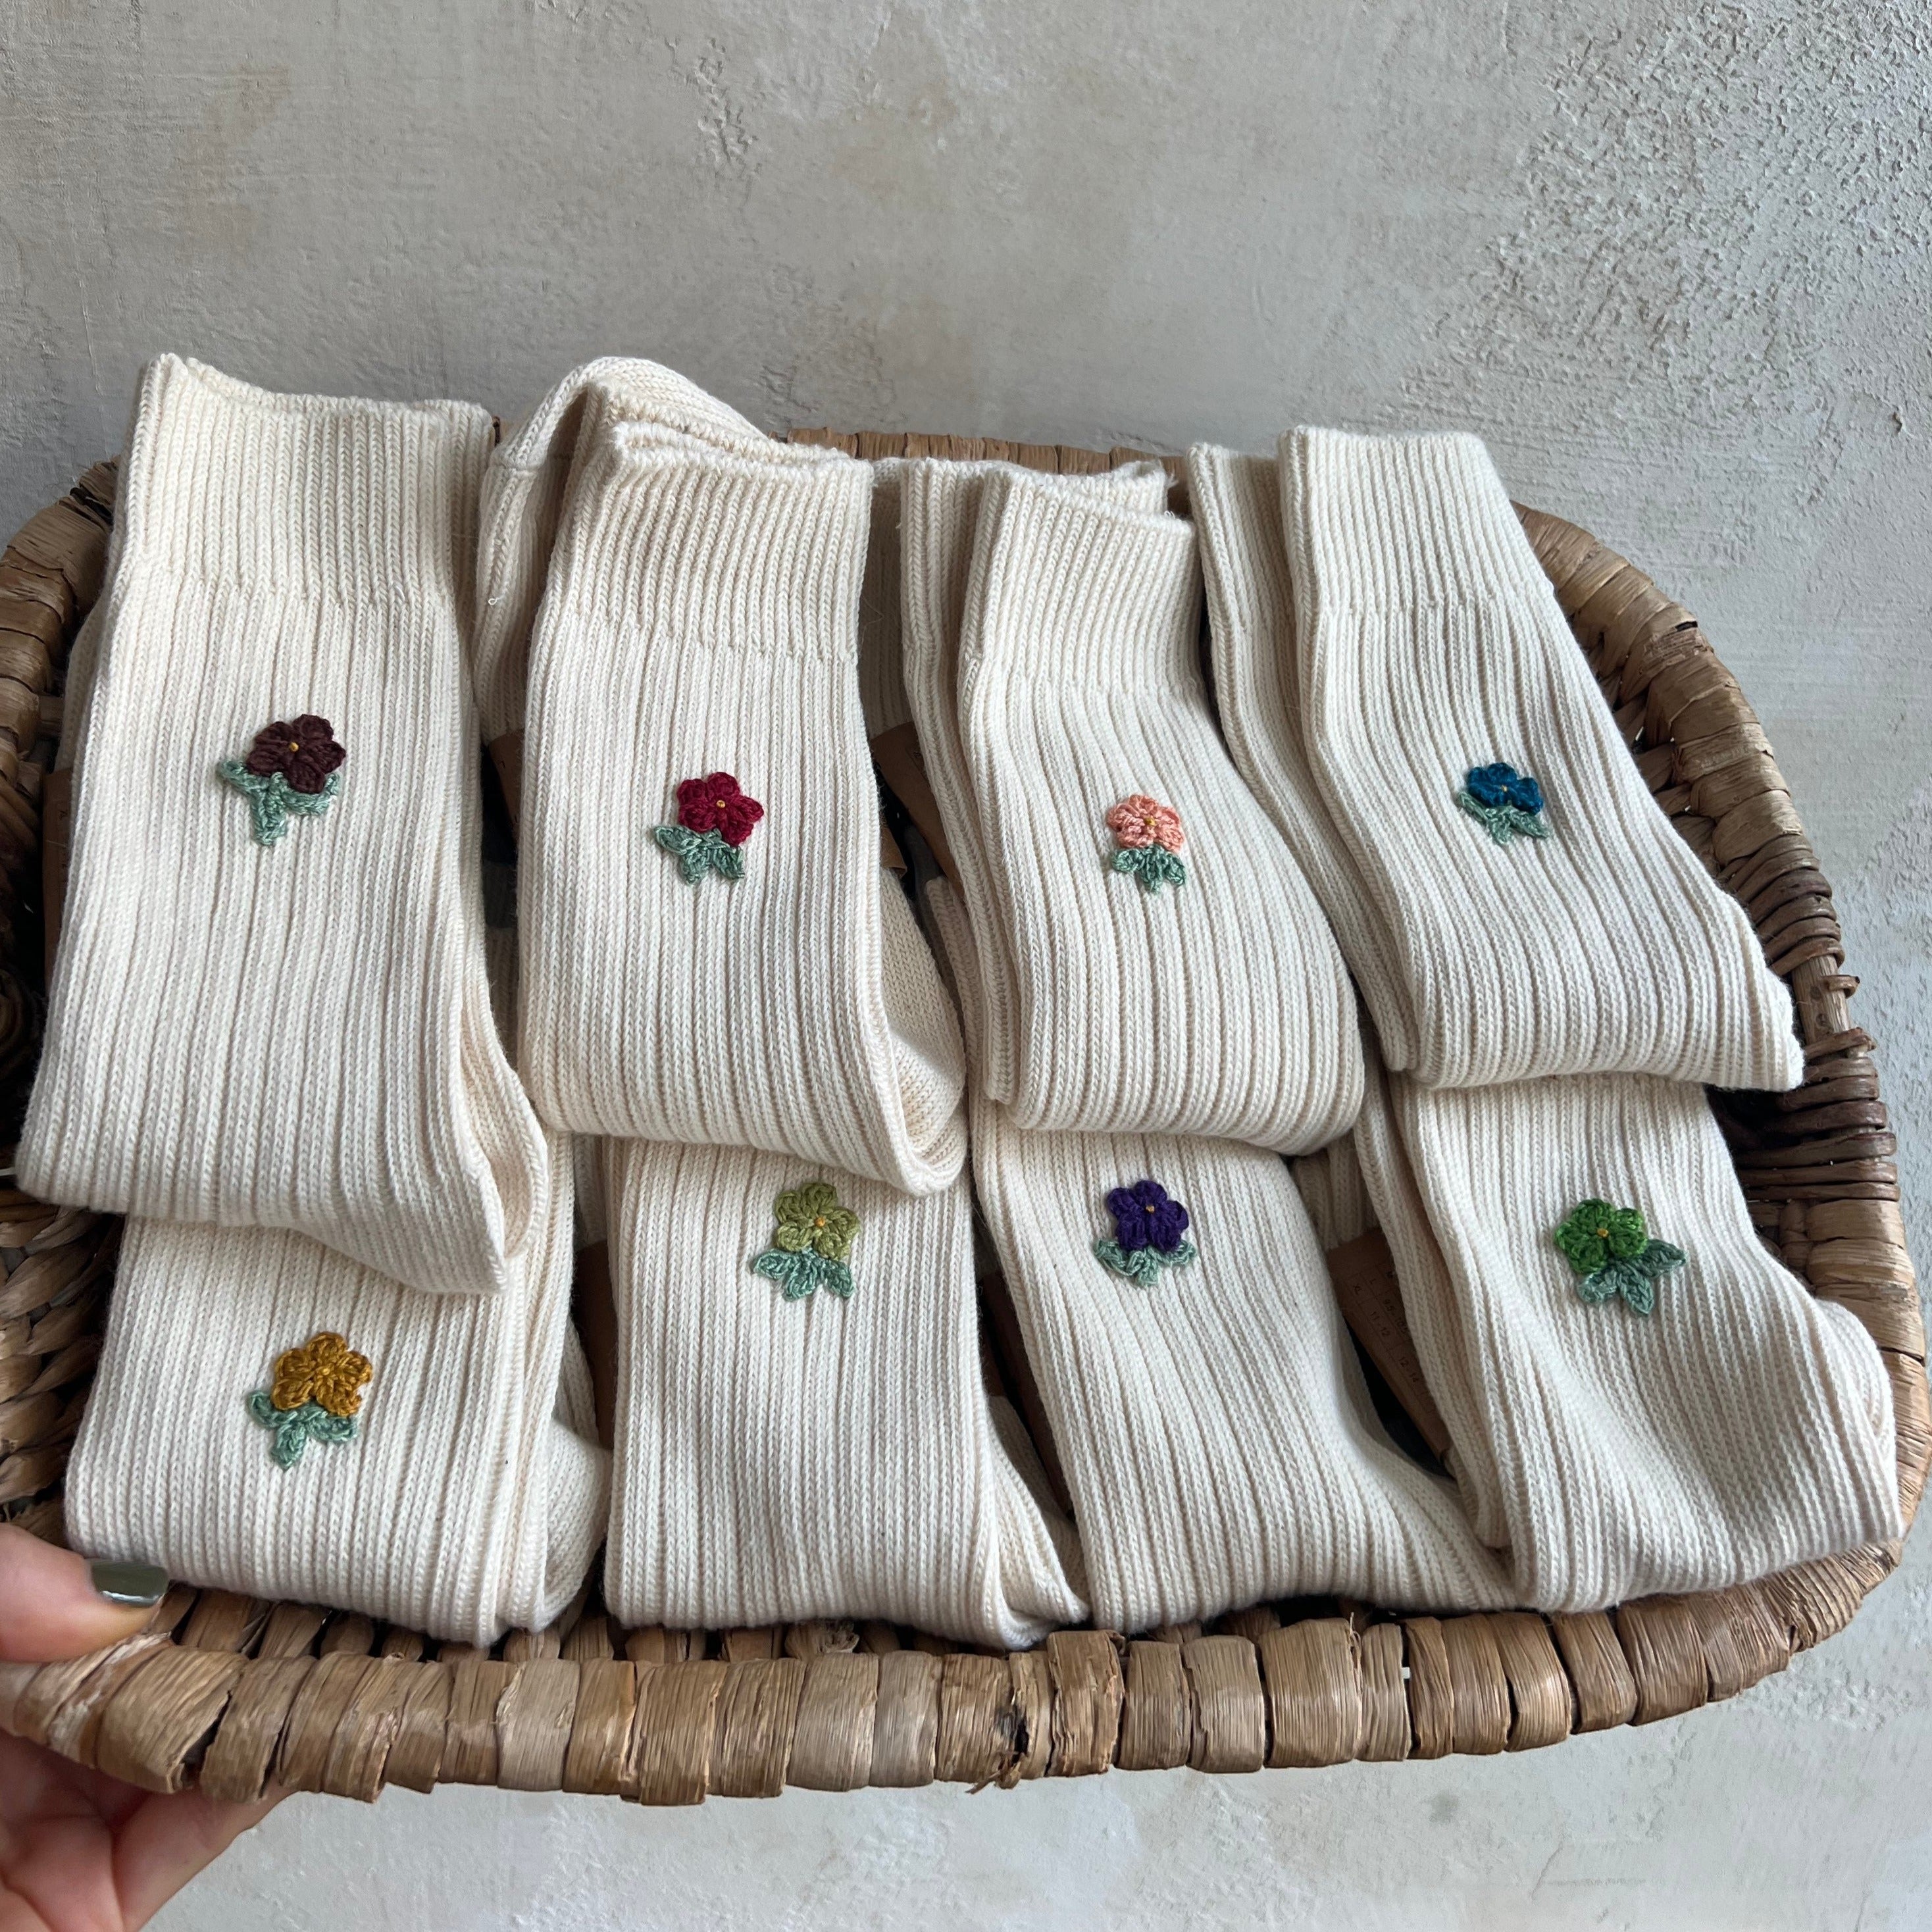 Crochet Flower Socks by Billy Bamboo